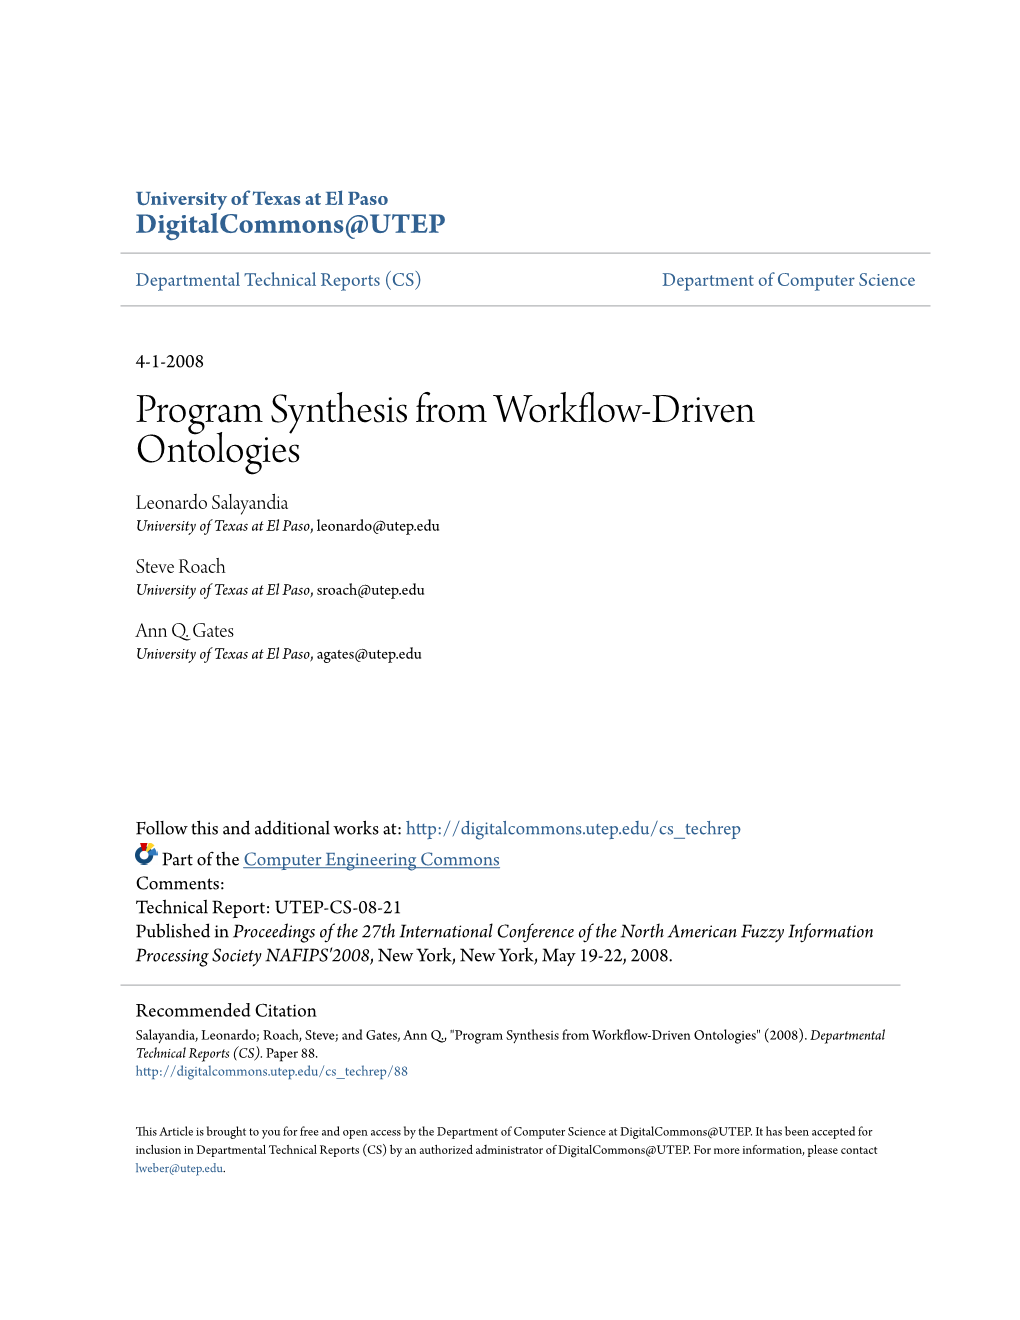 Program Synthesis from Workflow-Driven Ontologies Leonardo Salayandia University of Texas at El Paso, Leonardo@Utep.Edu